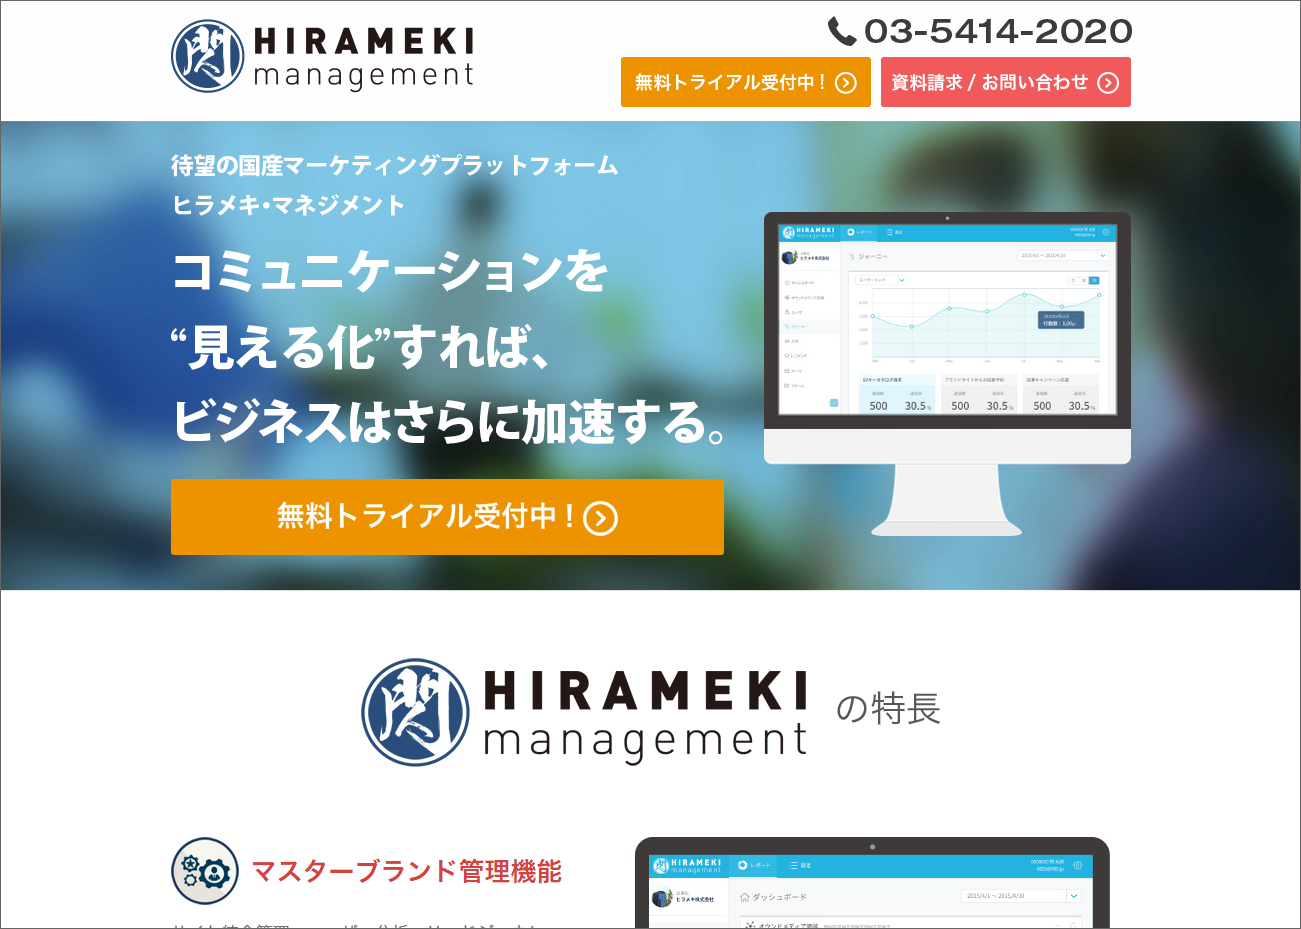 「HIRAMEKI management」サービスサイト